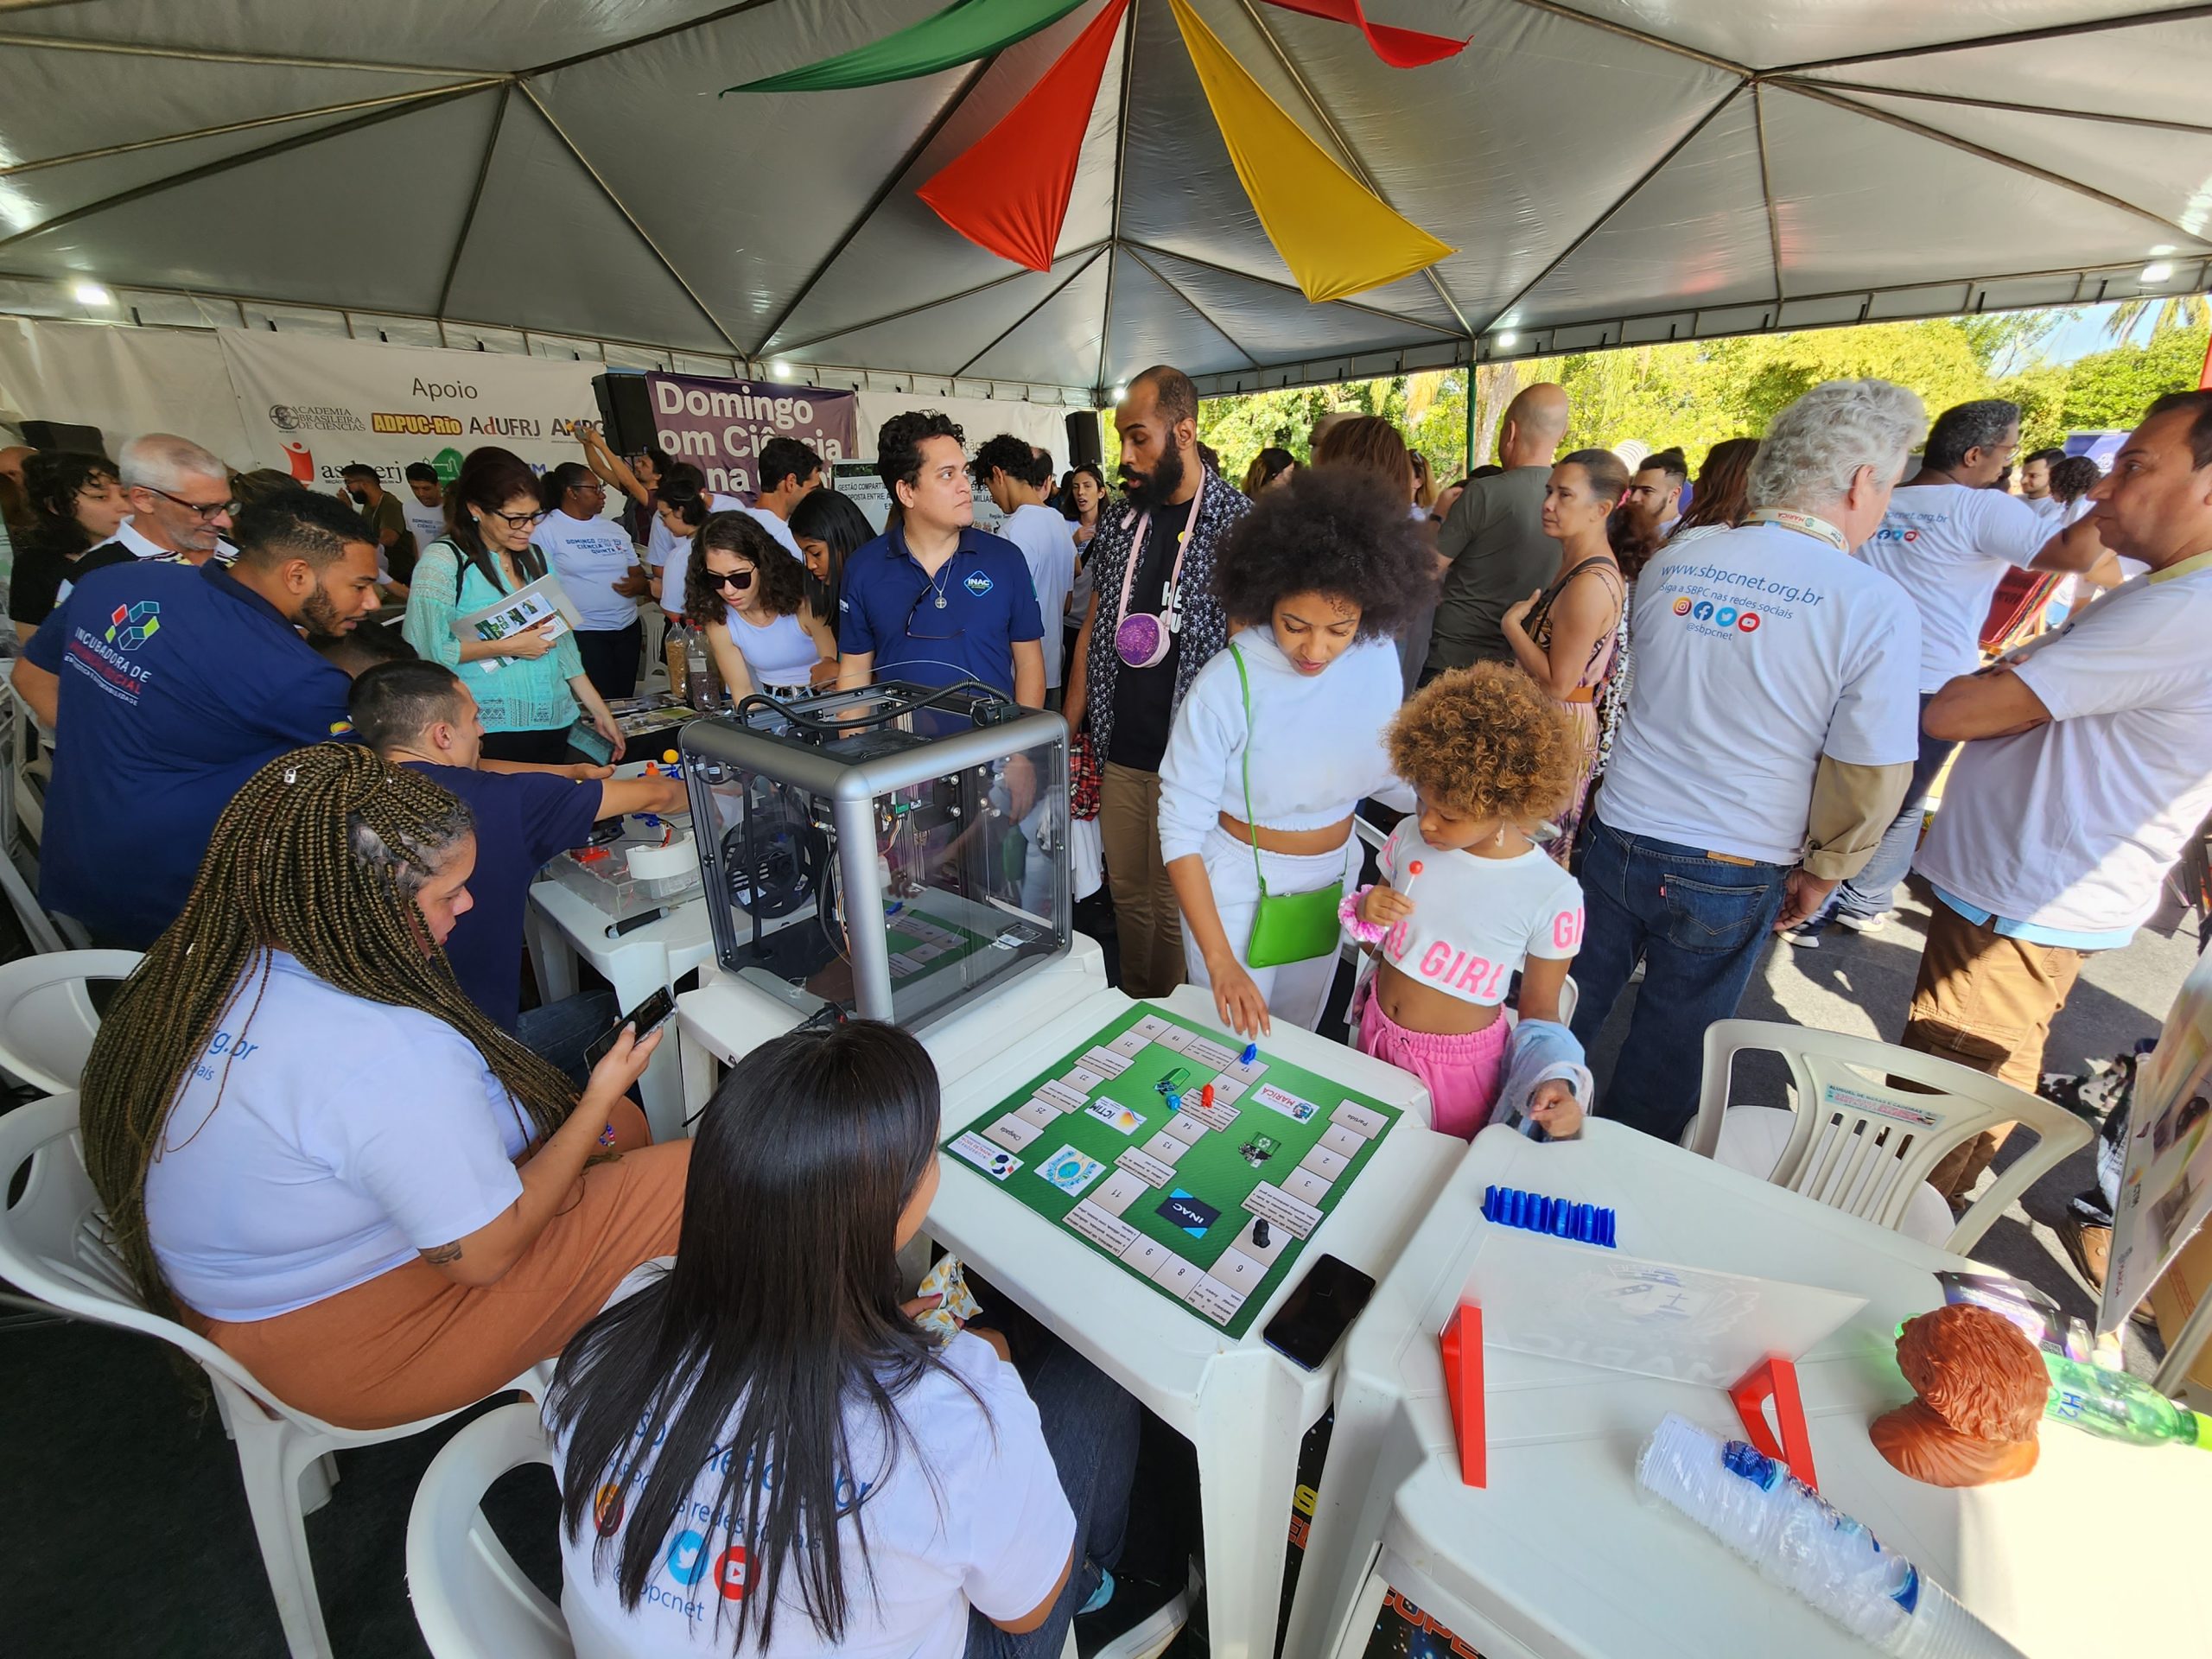 Marika participates in a science-focused event, Quinta da Boa Vista